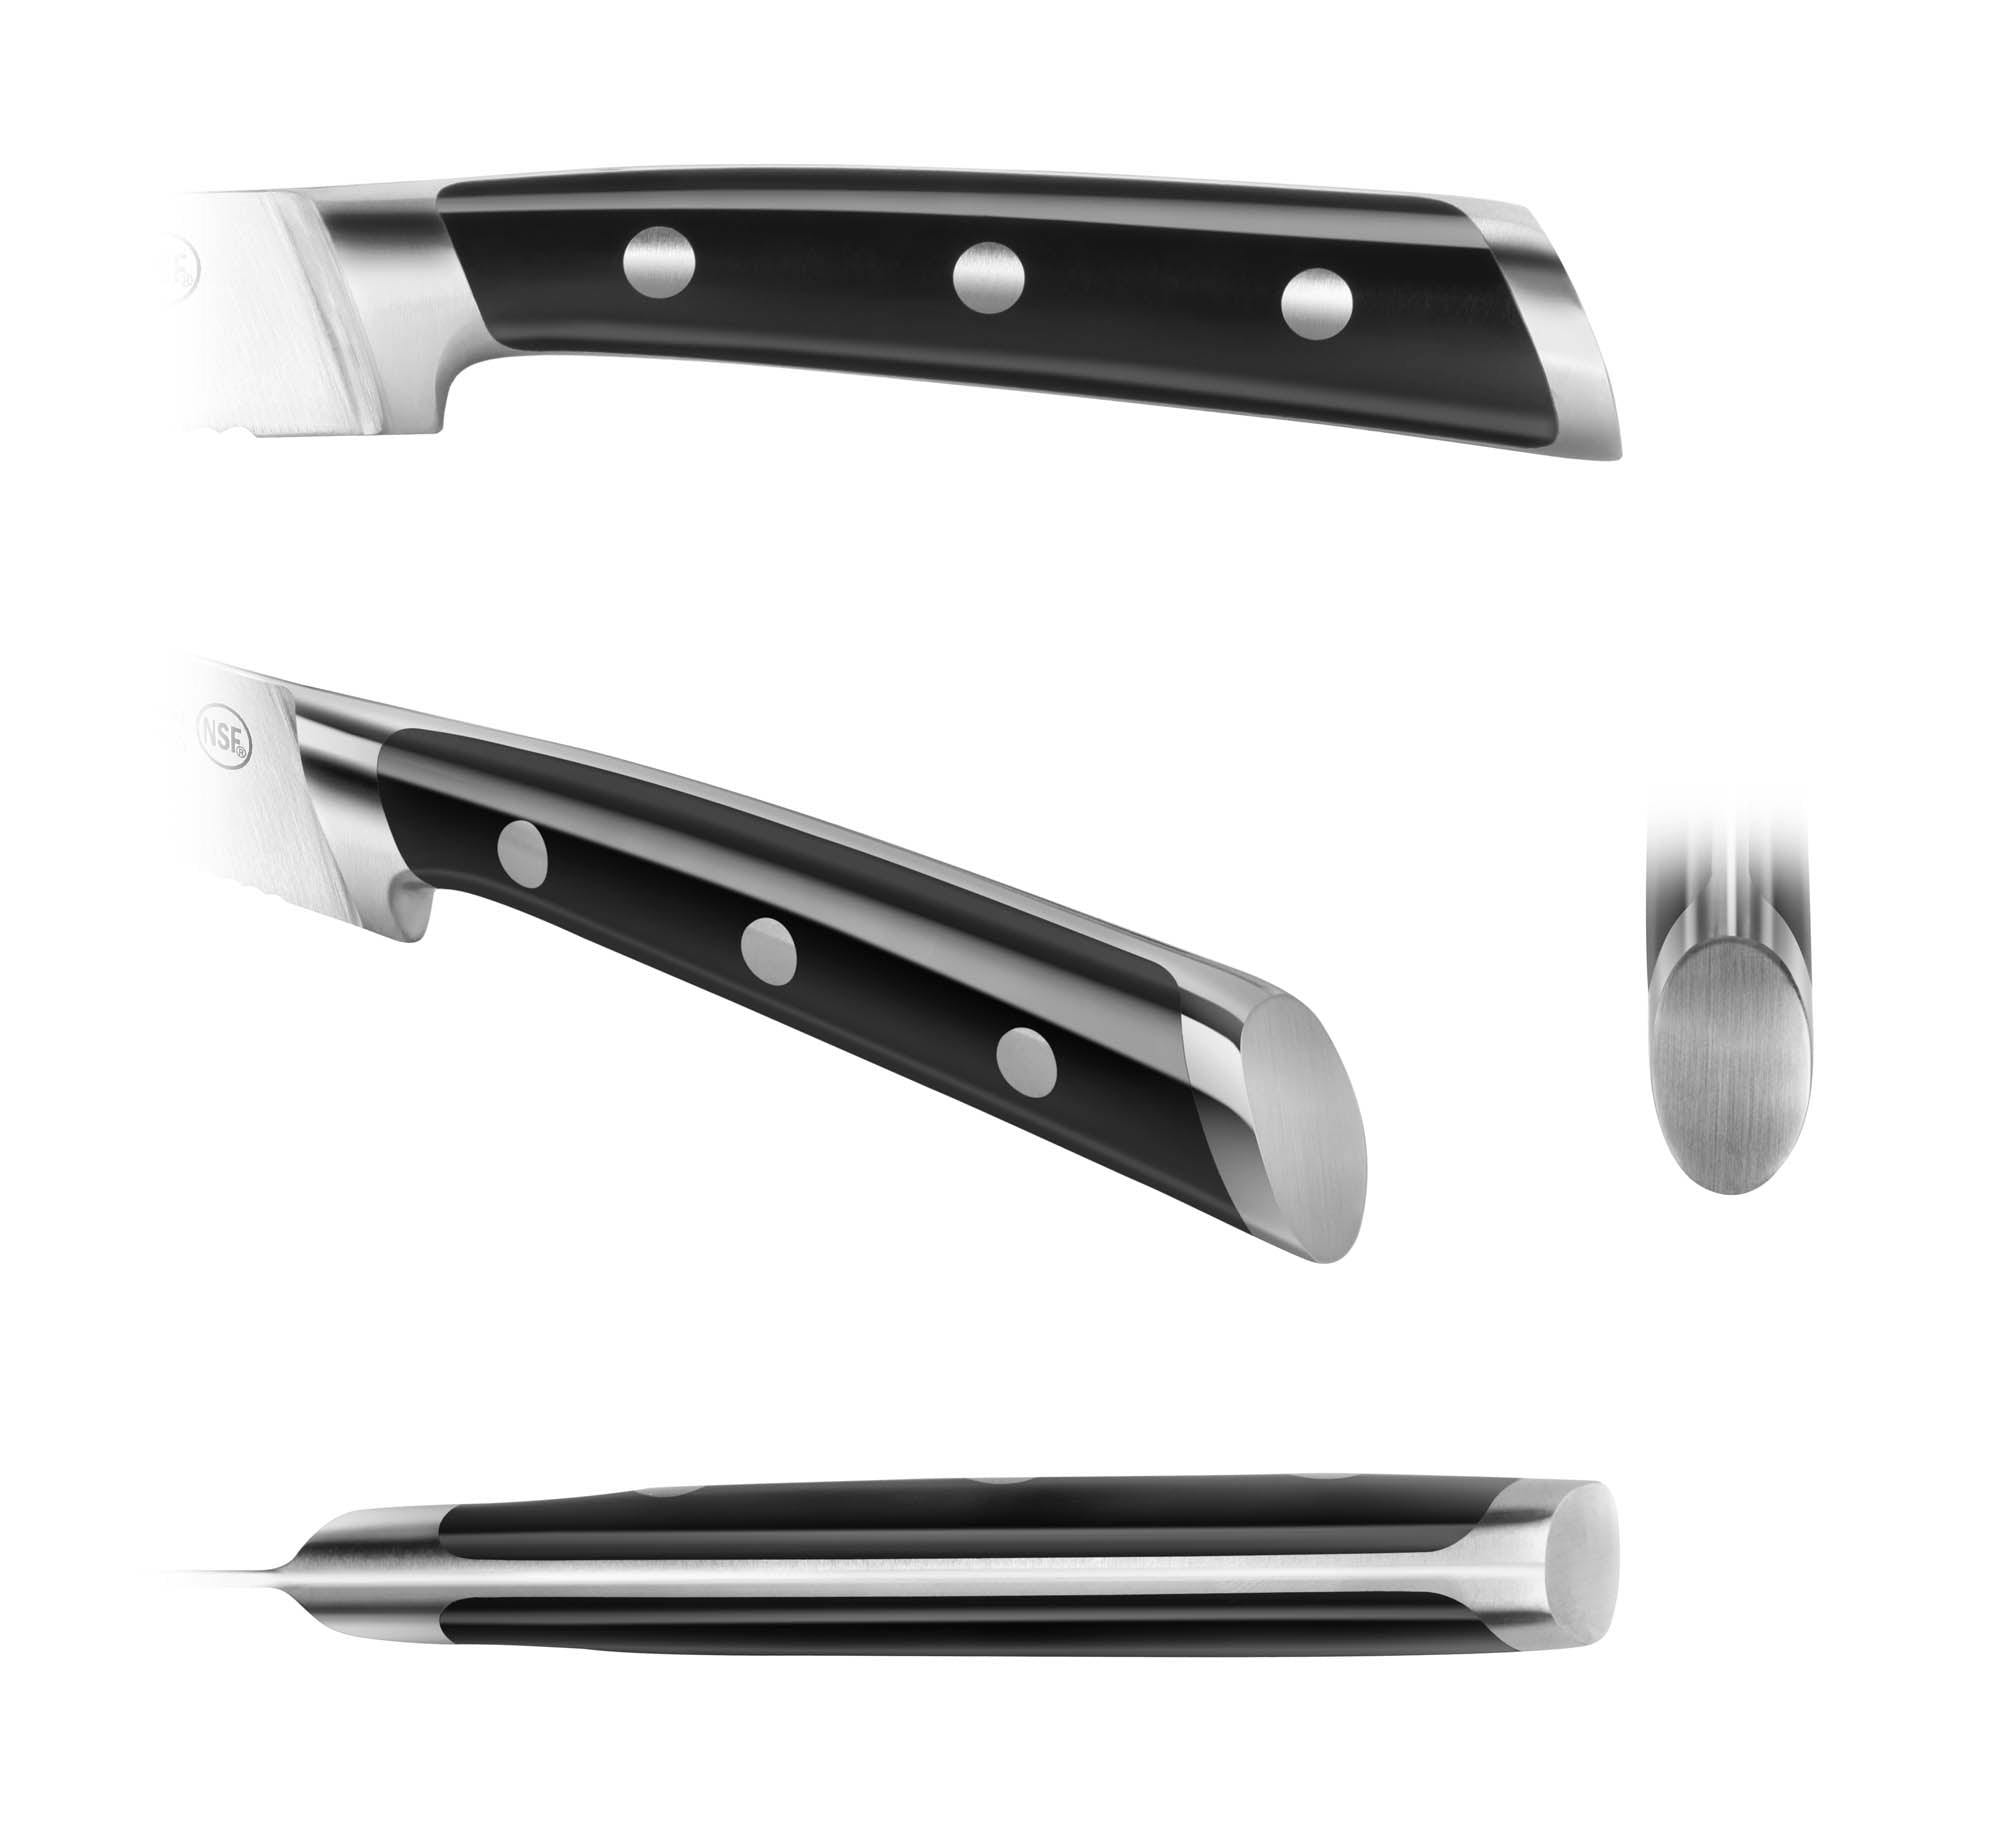 Cangshan TS Series 3.5" Paring Knife